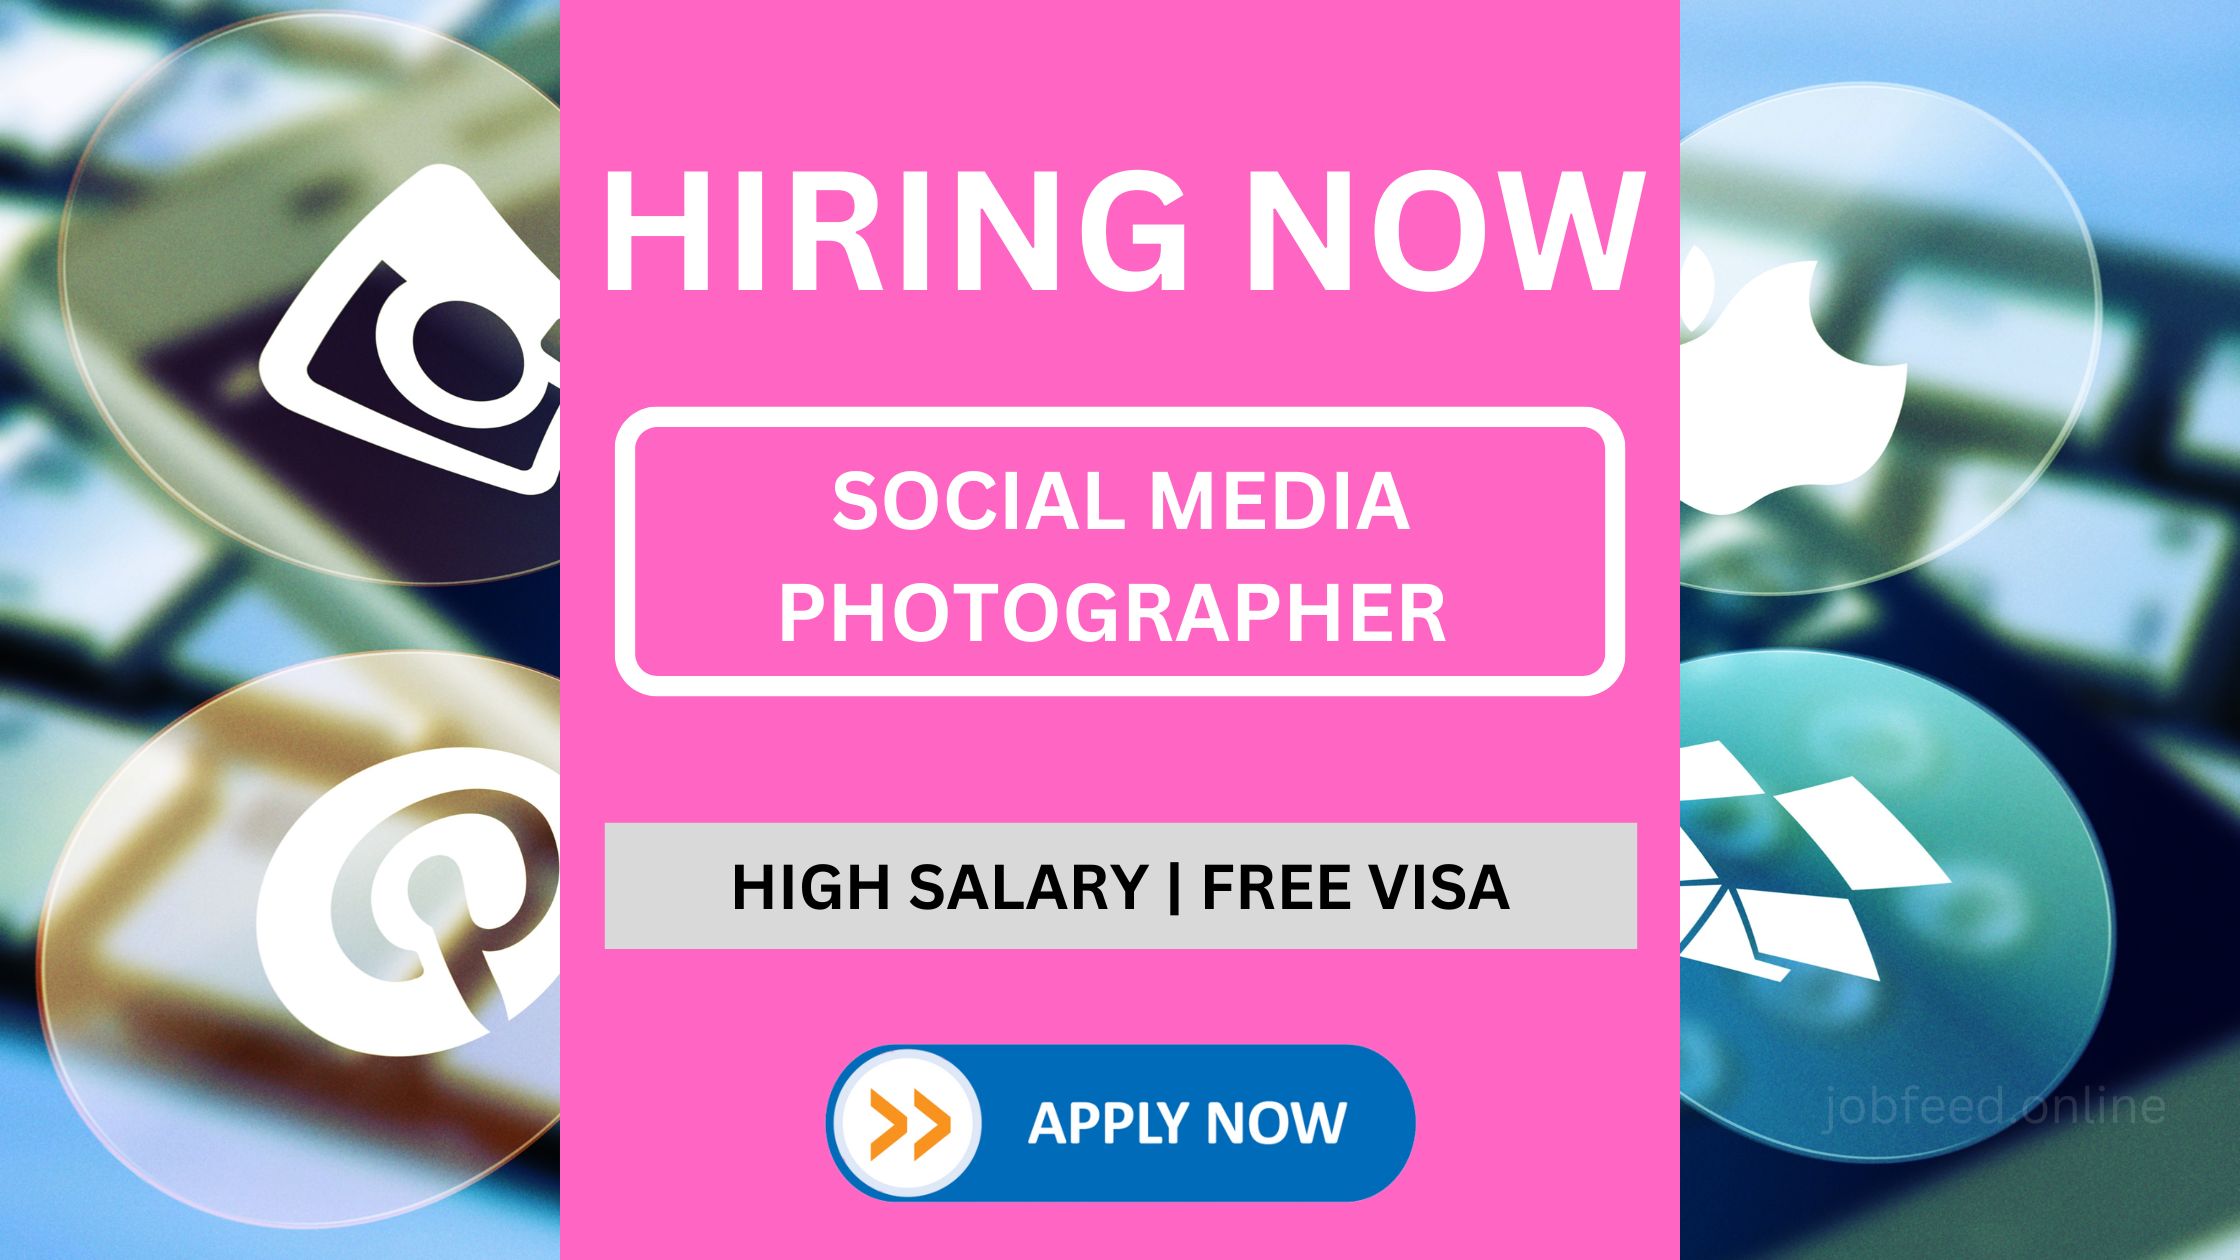 Social Media Photographer Vacancy with Attractive Salary